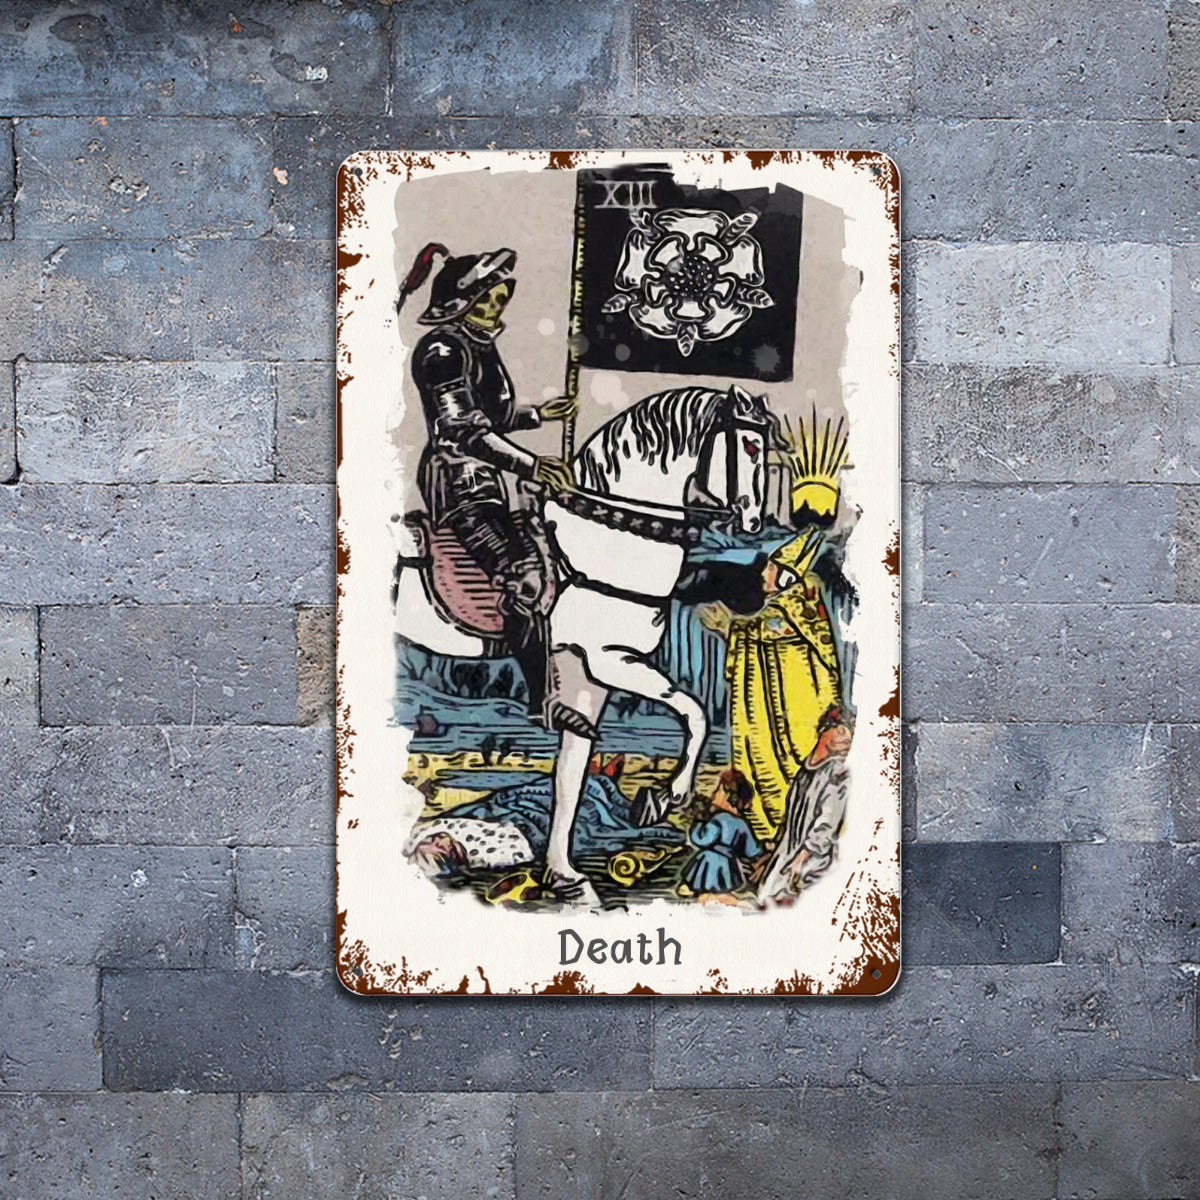 Tin Sign Of The Death Tarot Card Painting • Major Arcana Waite-Style Cards Vintage Metal Print • Apollo Tarot Design Shop